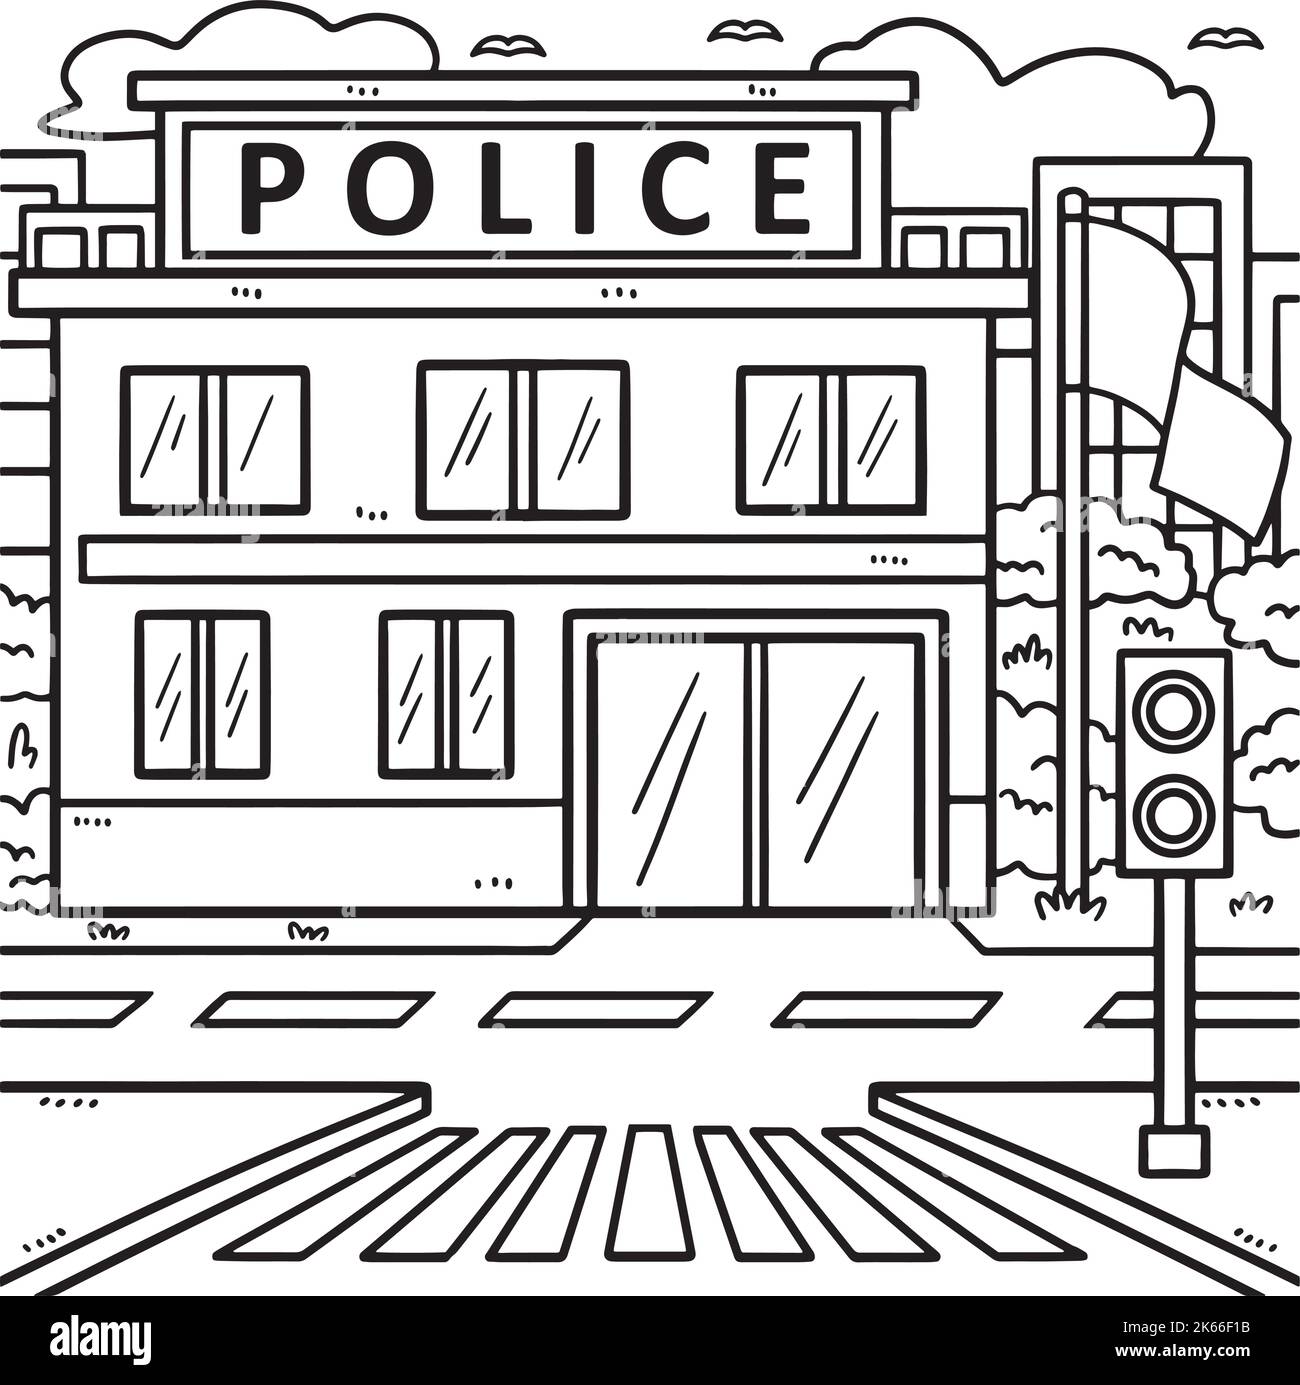 https://c8.alamy.com/comp/2K66F1B/police-station-coloring-page-for-kids-2K66F1B.jpg